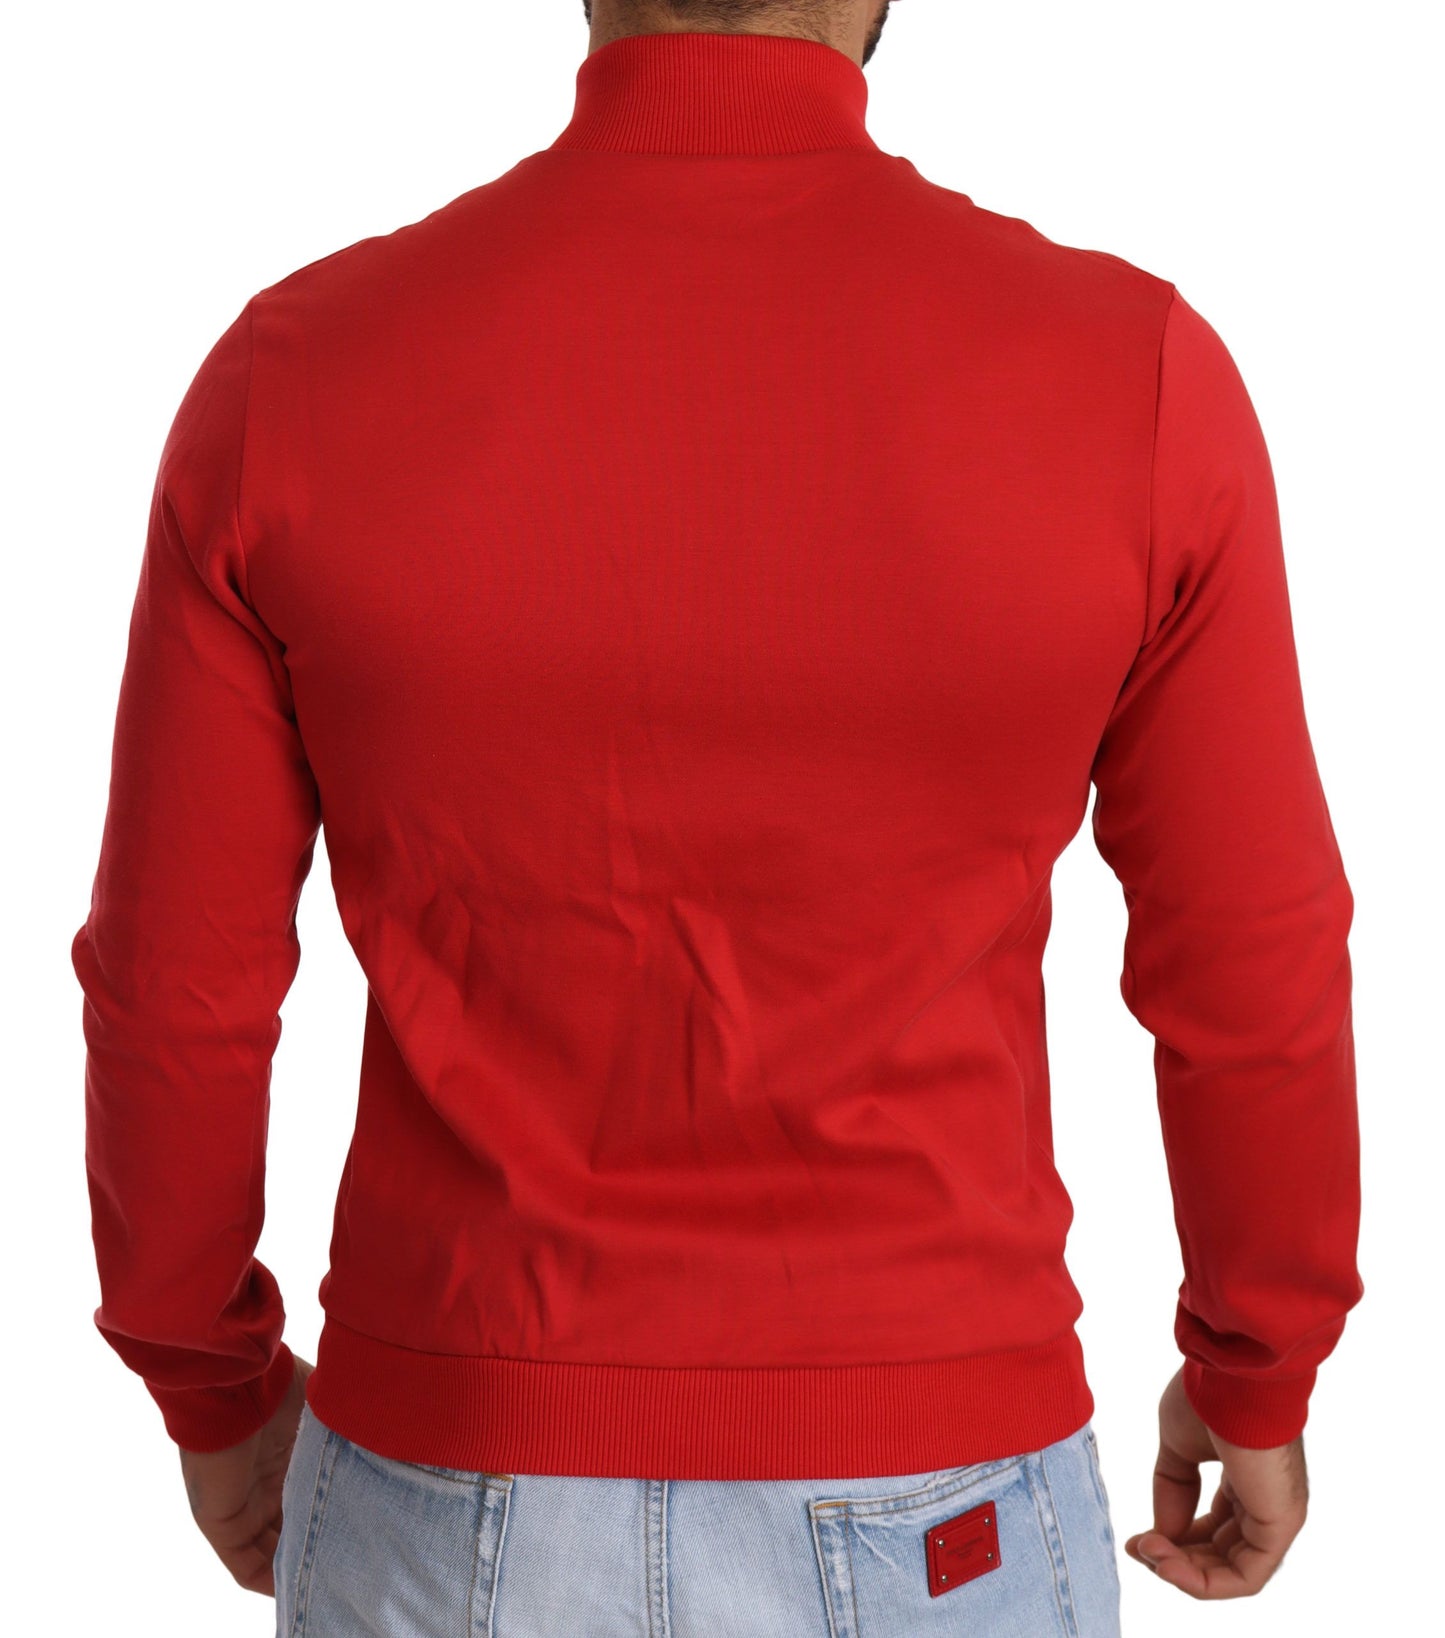 Elegant Red Full Zip Sweater with DG Motor Club Motif